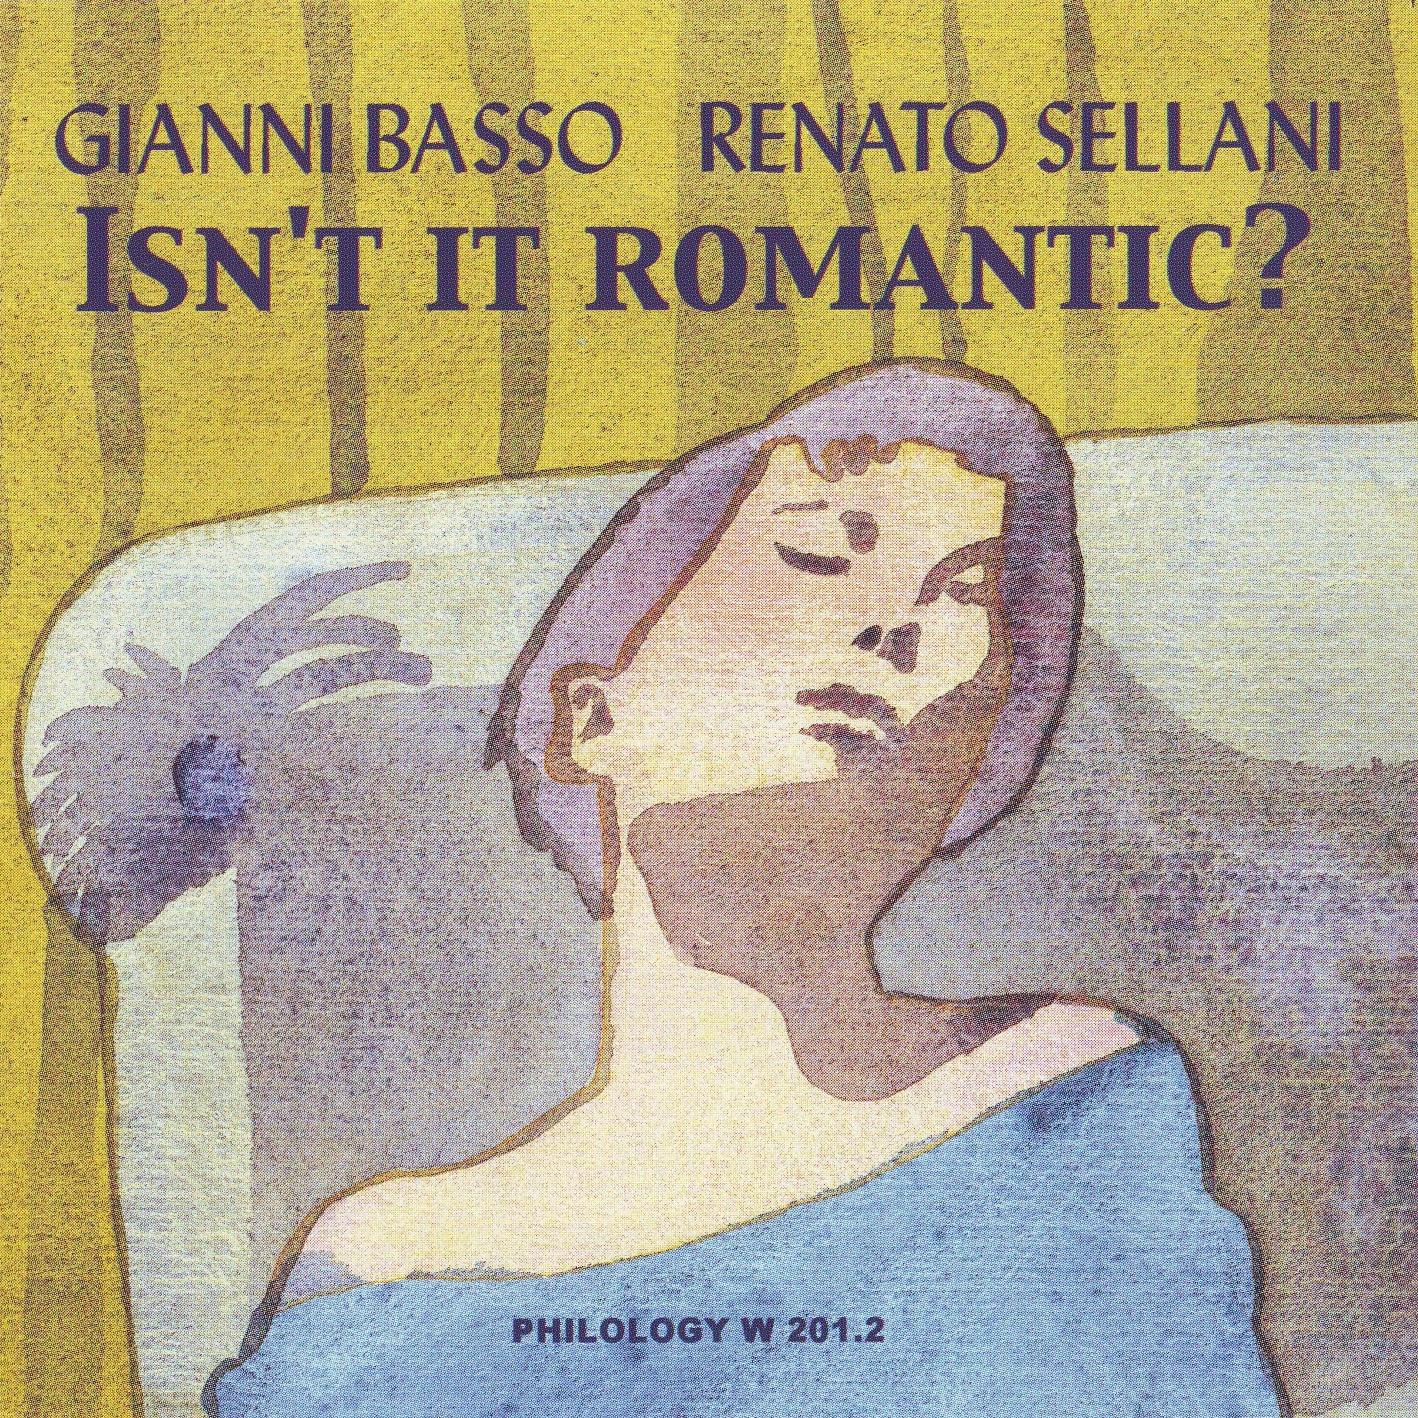 GIANNI BASSO - Isn't It Romantic cover 